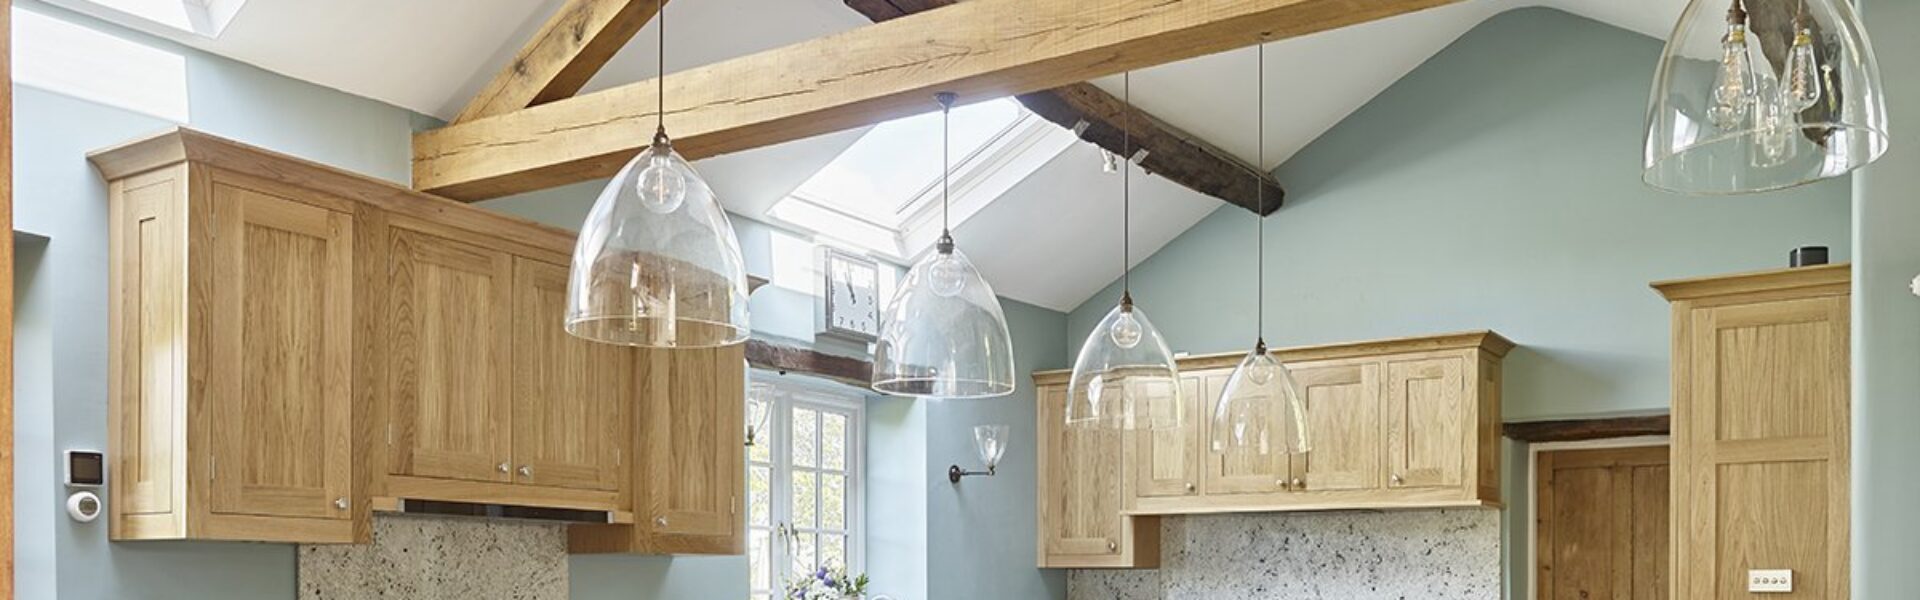 Our beautiful Ledbury pendant lights in a luxury shaker style kitchen